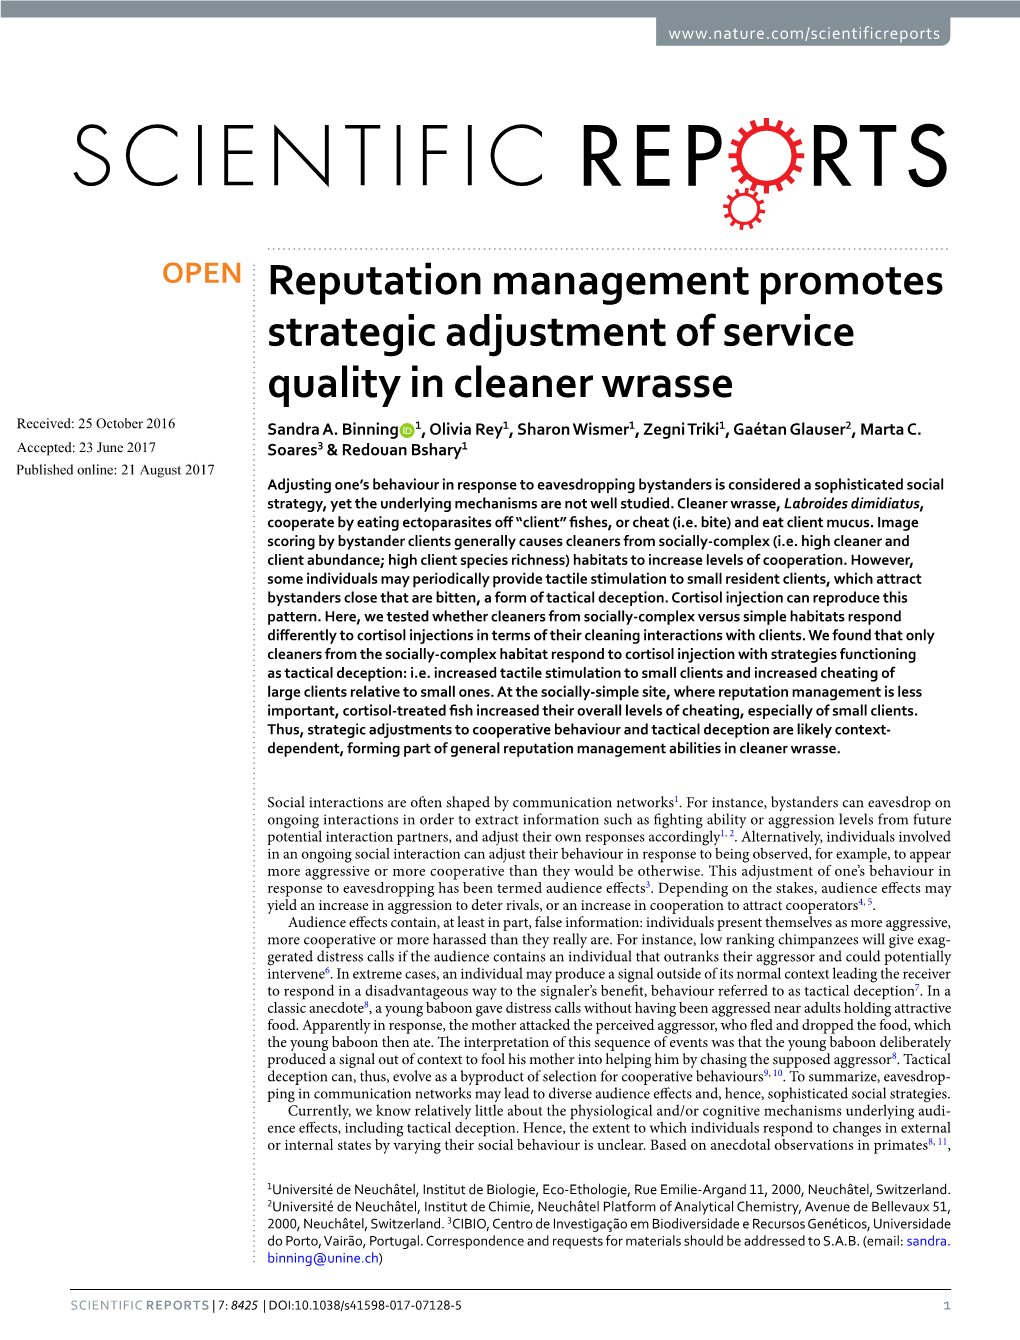 Reputation Management Promotes Strategic Adjustment of Service Quality in Cleaner Wrasse Received: 25 October 2016 Sandra A